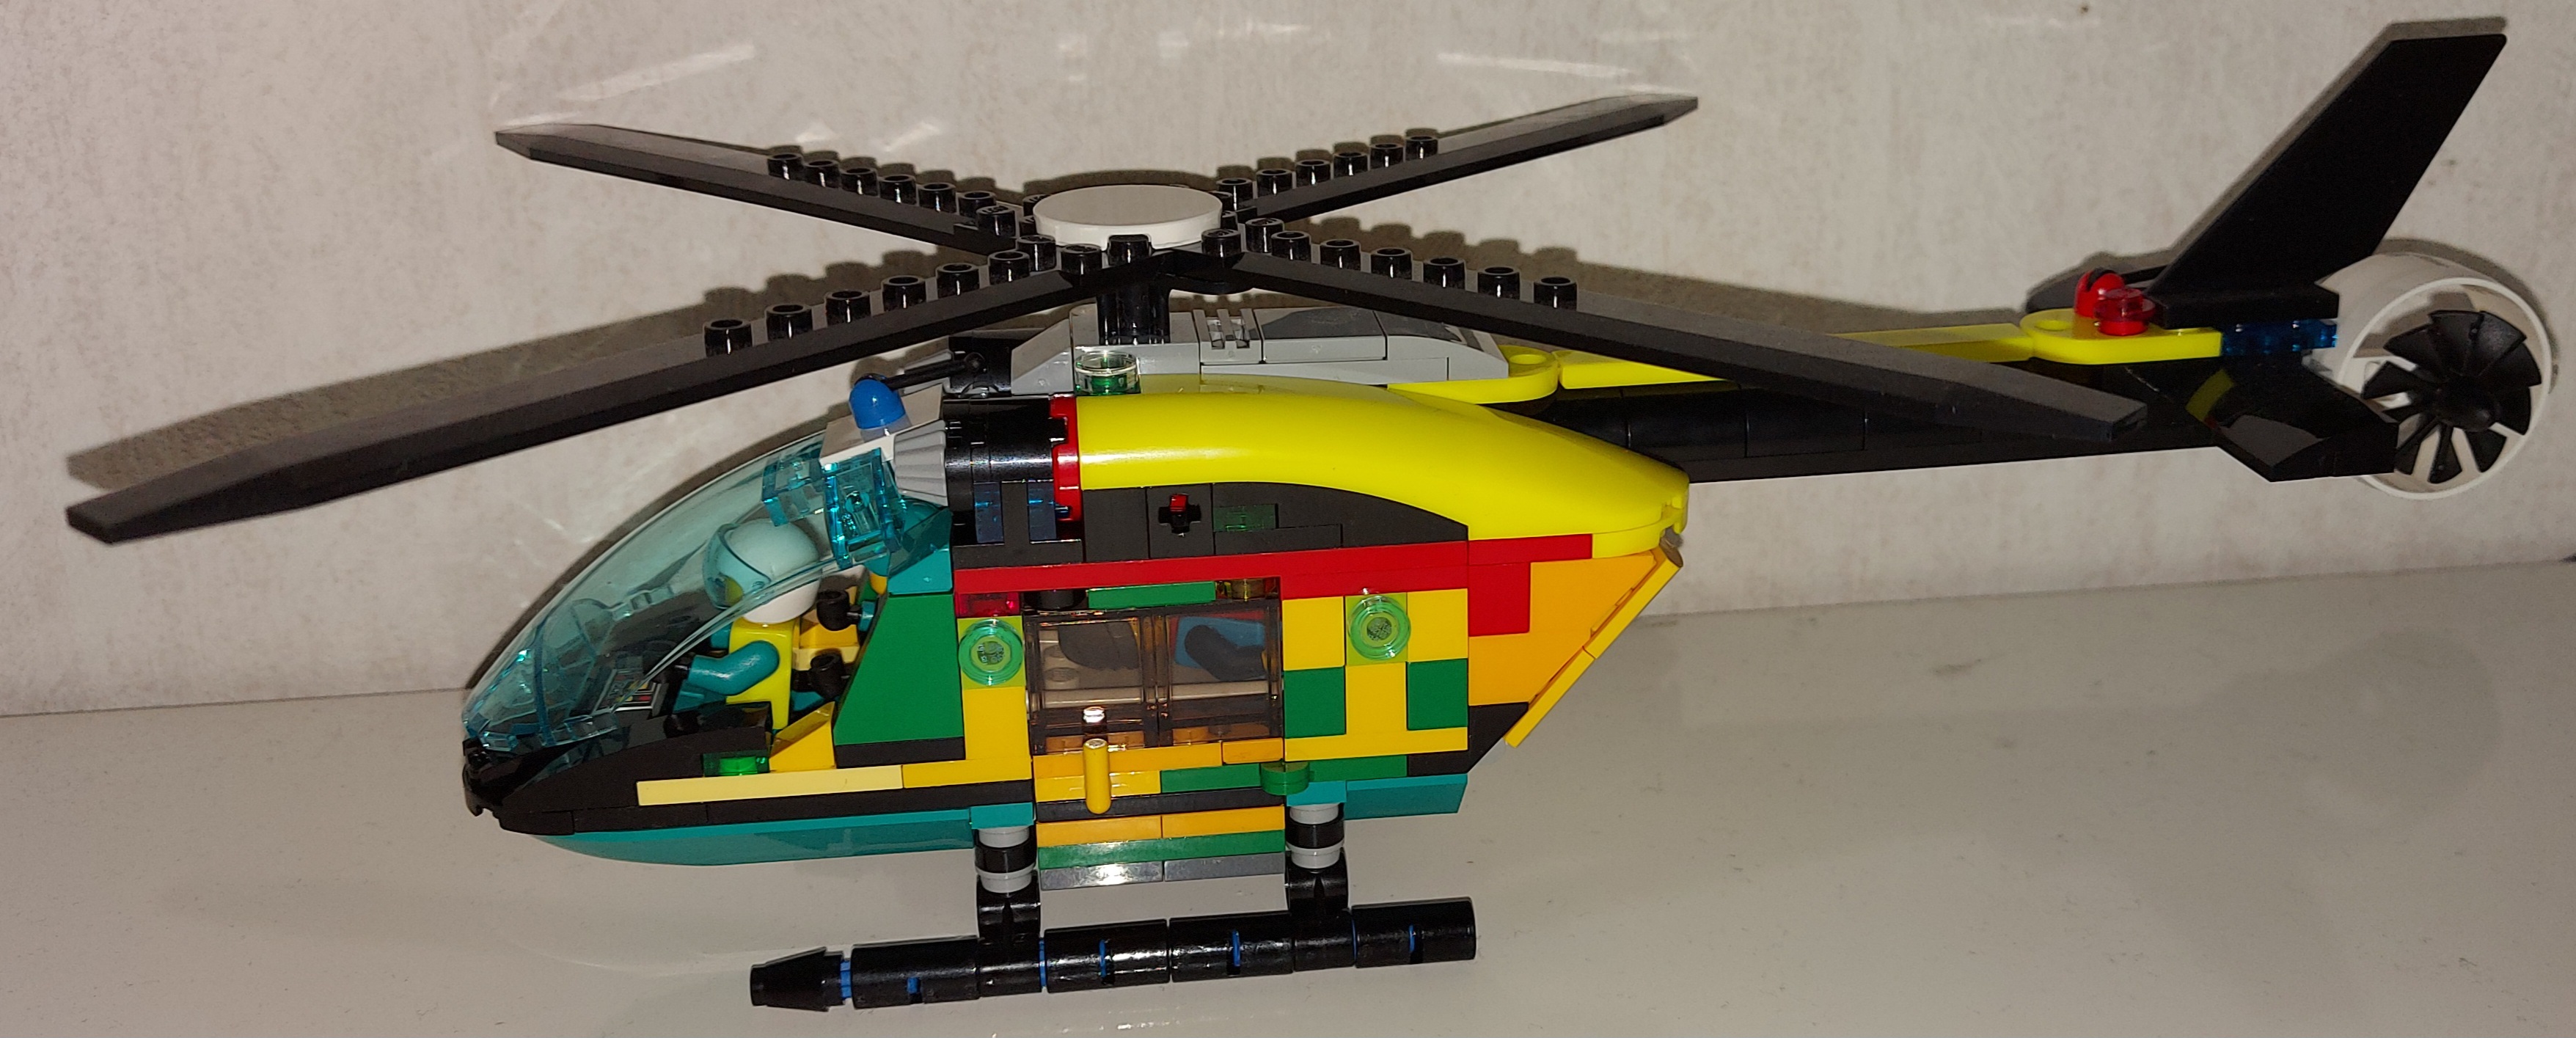 Min egna lego city Ambulanshelikopter. .jpg